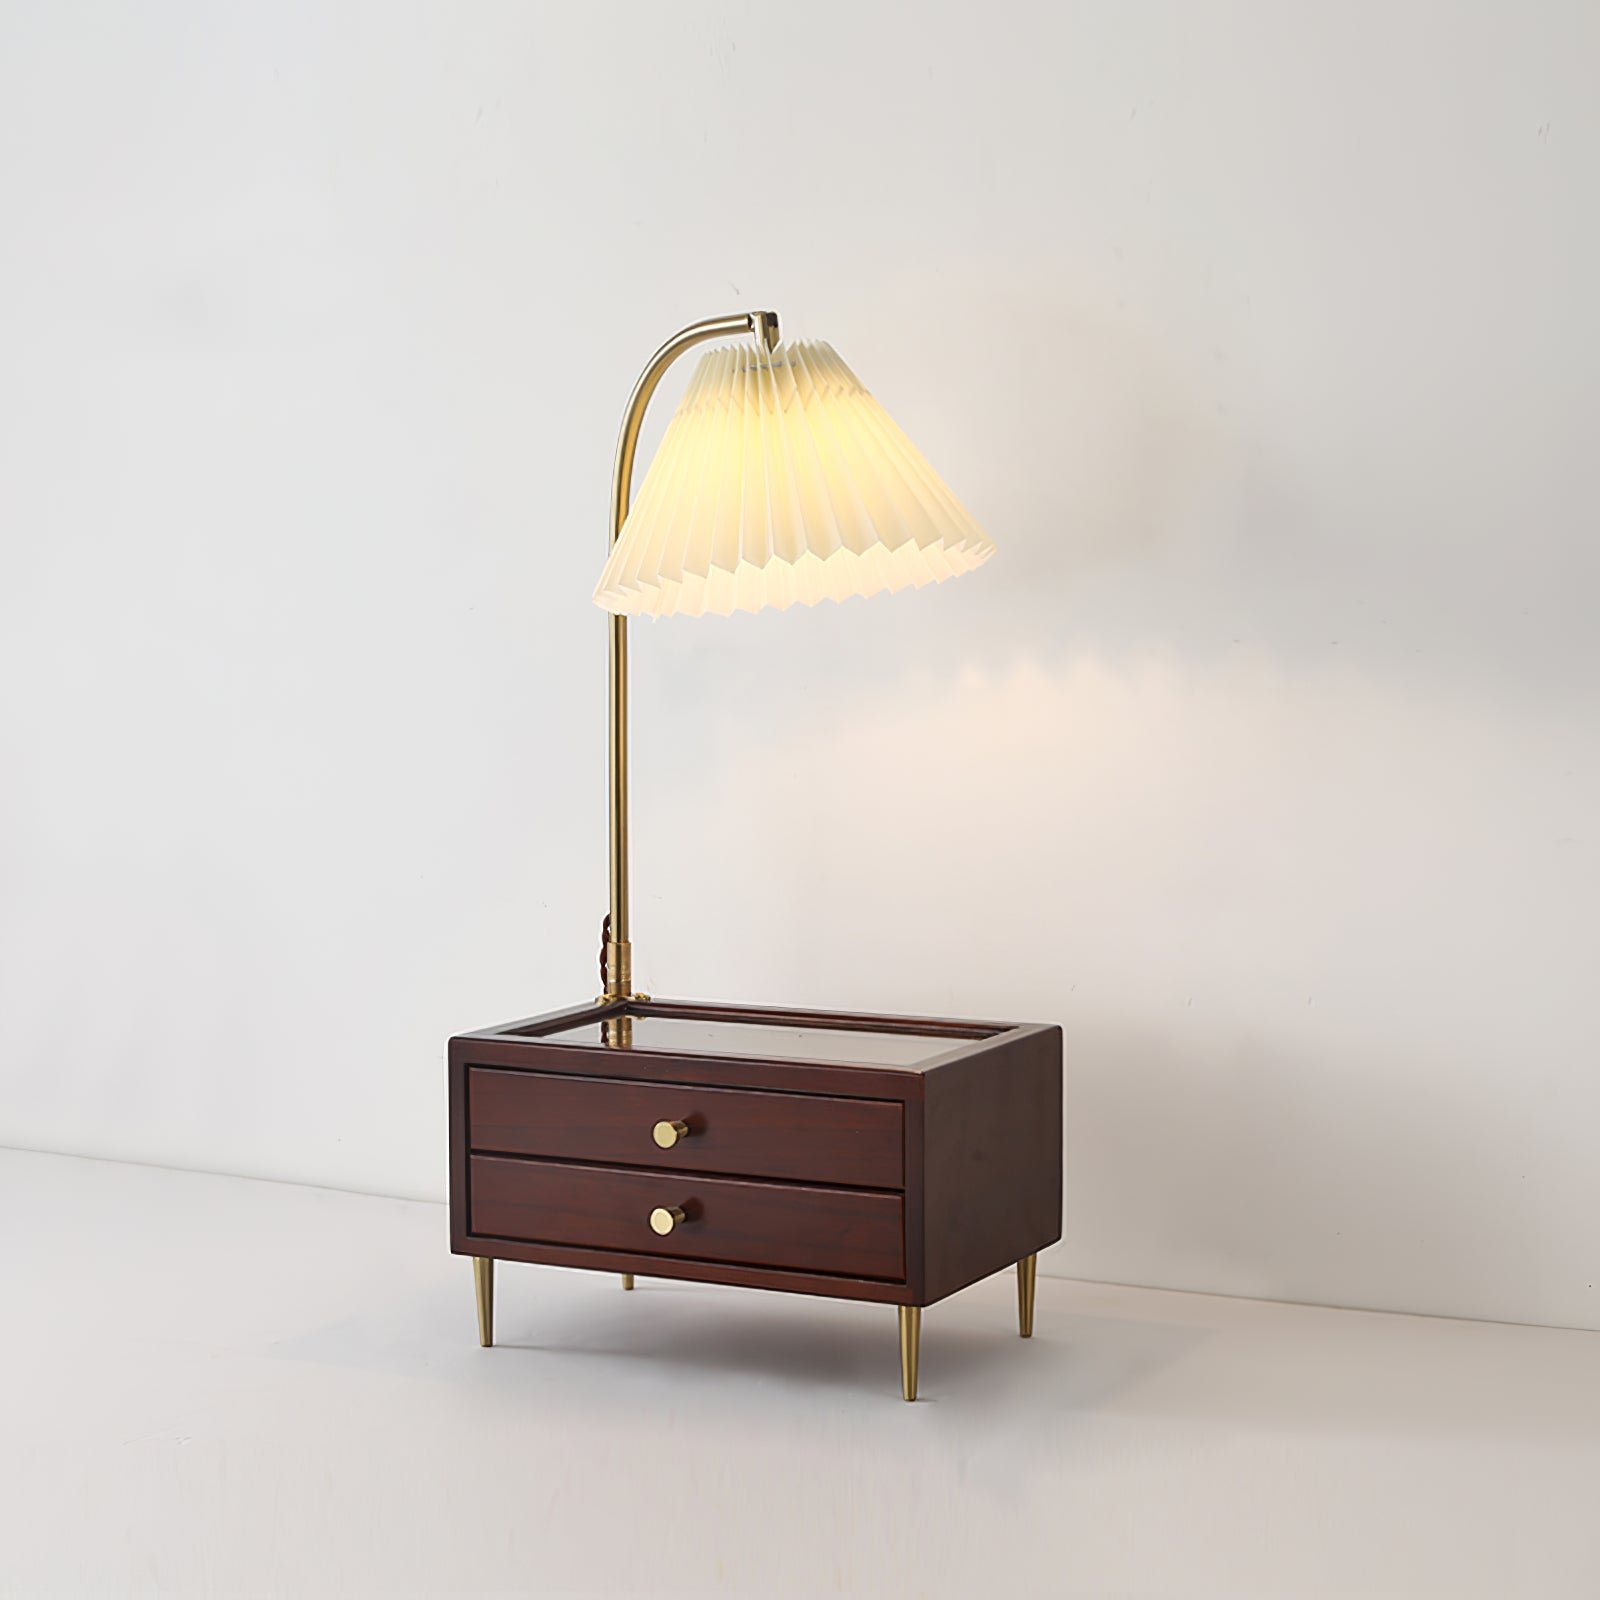 Wooden Table Lamp with Drawer, Dimensions L 11.8″ x W 8.7″ x H 24.4″ (L 30cm x W 22cm x H 62cm), Teak Finish, UK Plug